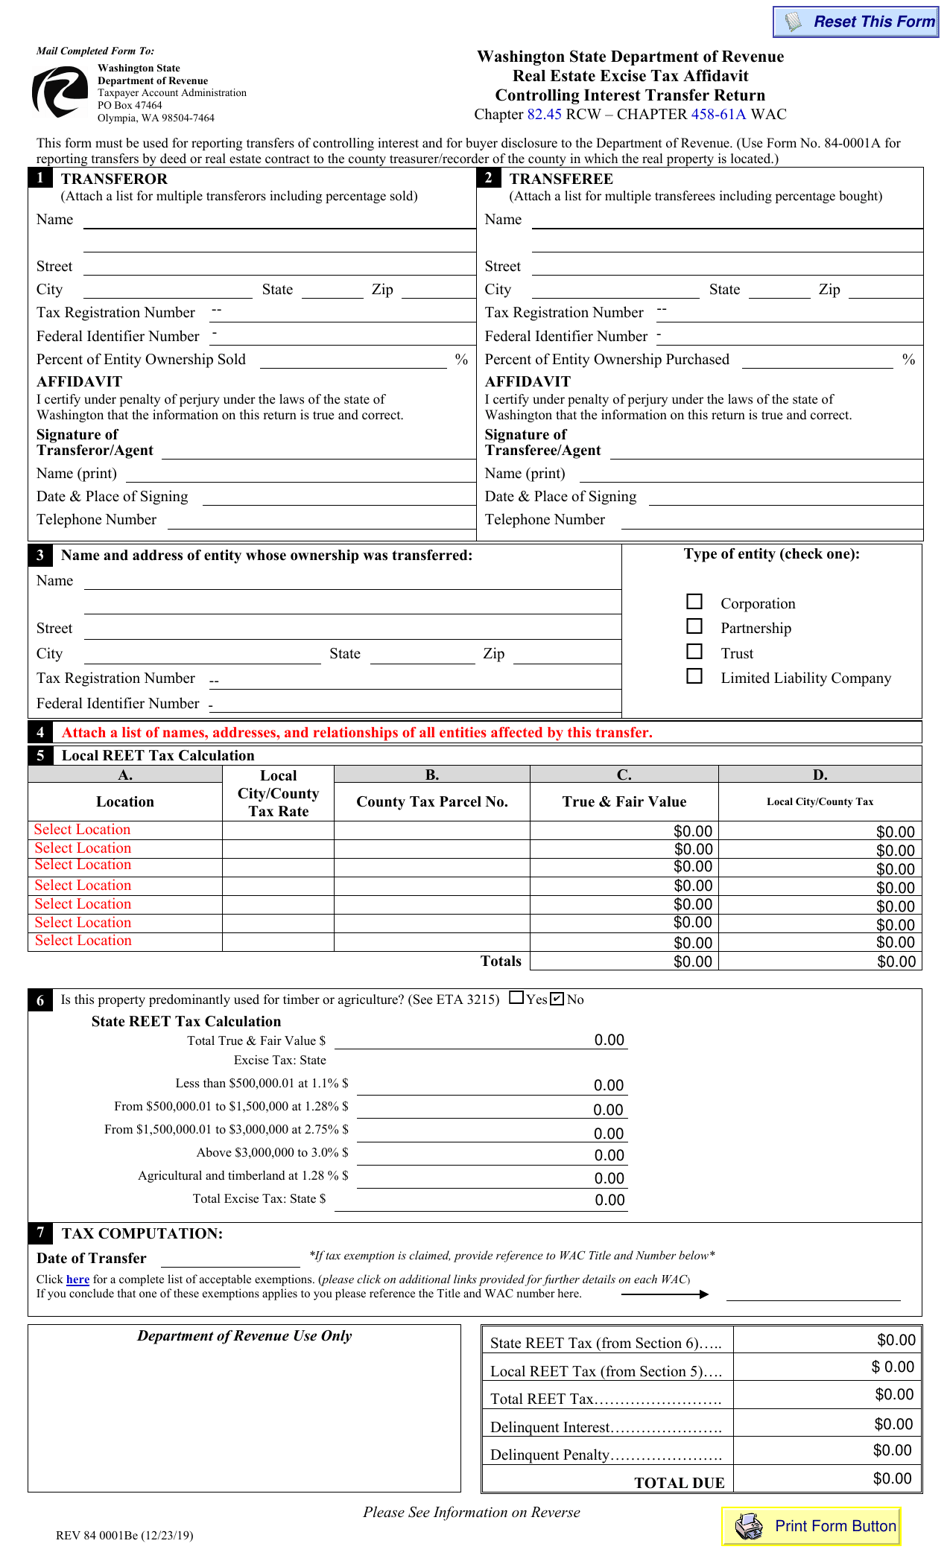 Form REV84 0001B Real Estate Excise Tax Affidavit - Controlling Interest Transfer Return - Washington, Page 1